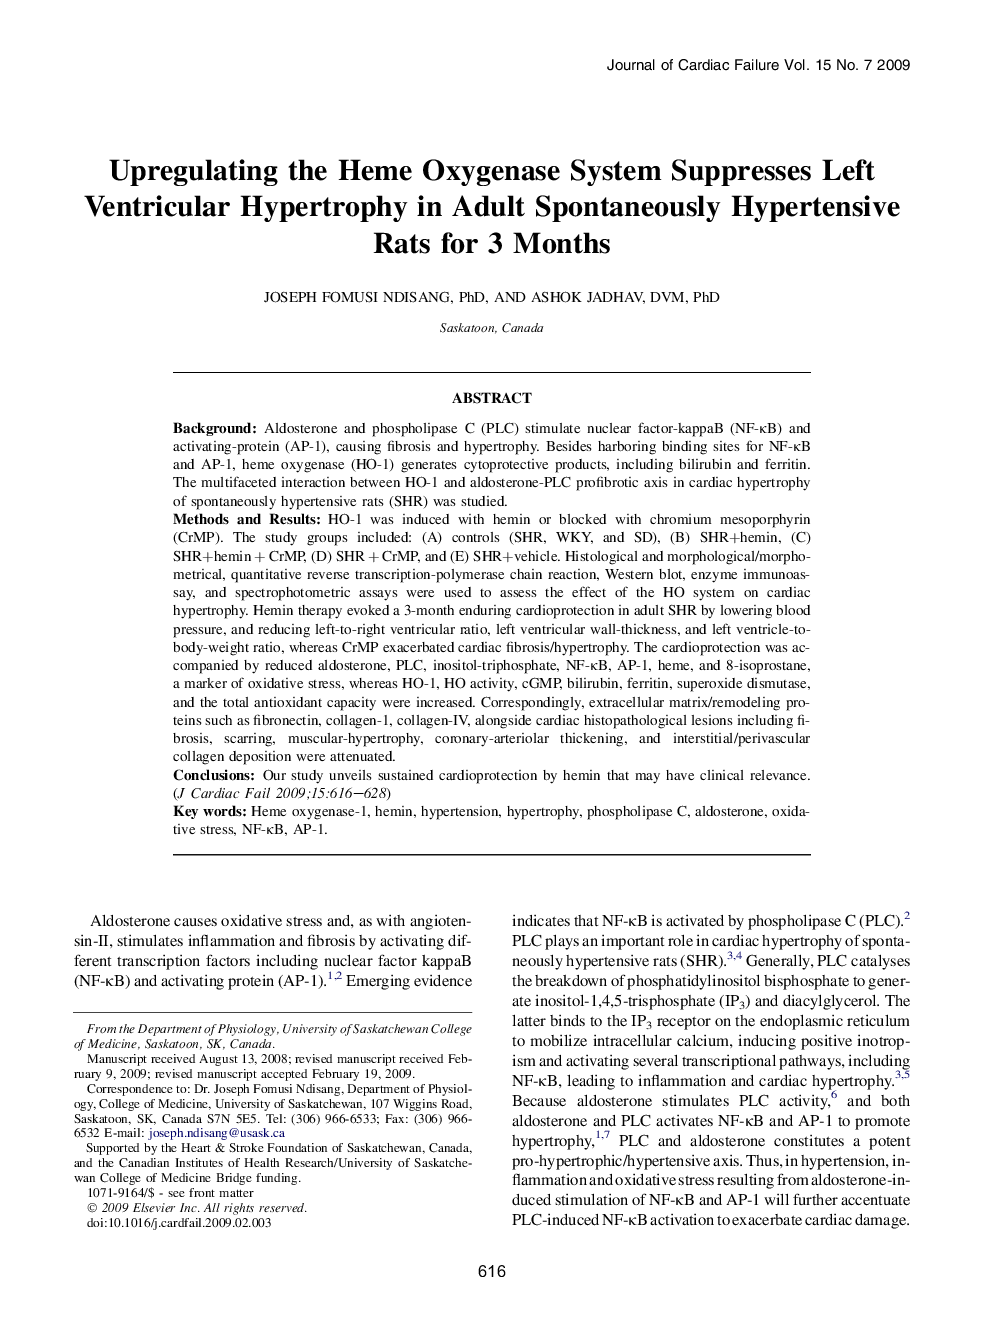 Upregulating the Heme Oxygenase System Suppresses Left Ventricular Hypertrophy in Adult Spontaneously Hypertensive Rats for 3 Months